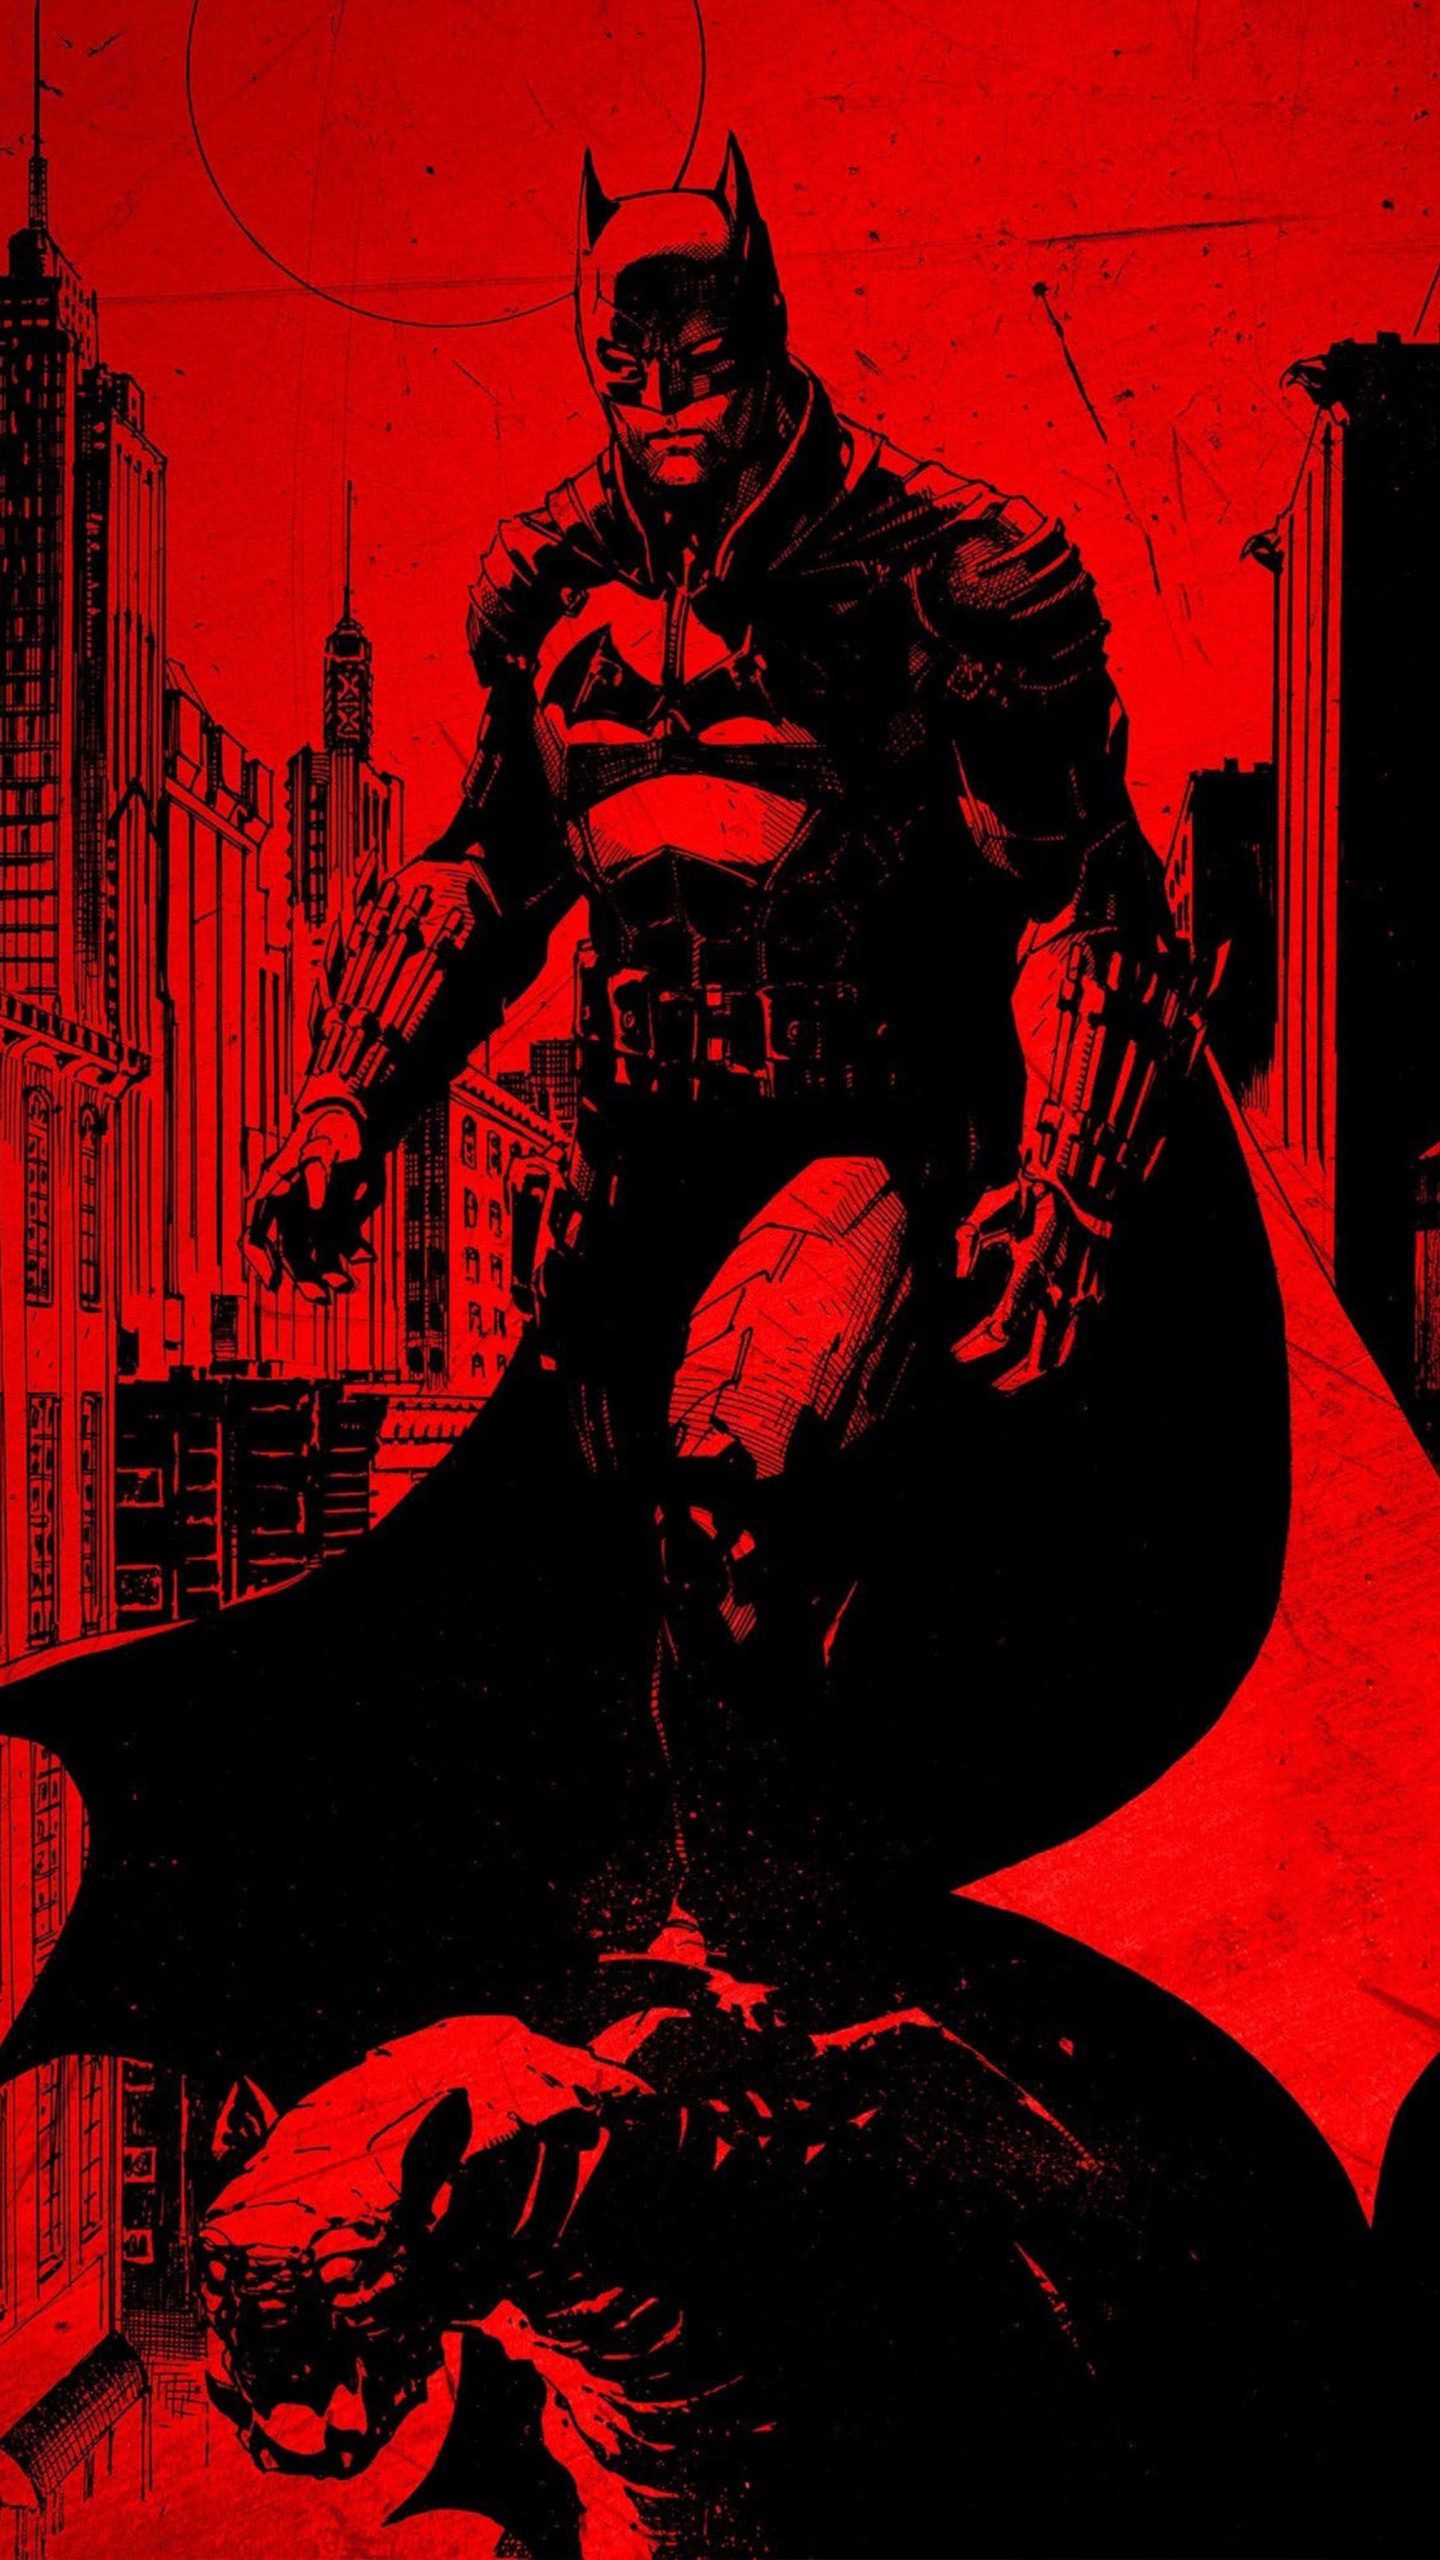 Batman 2021 Movie Poster 4K Ultra HD Mobile Wallpaper. Batman wallpaper, Superhero wallpaper, Batman artwork